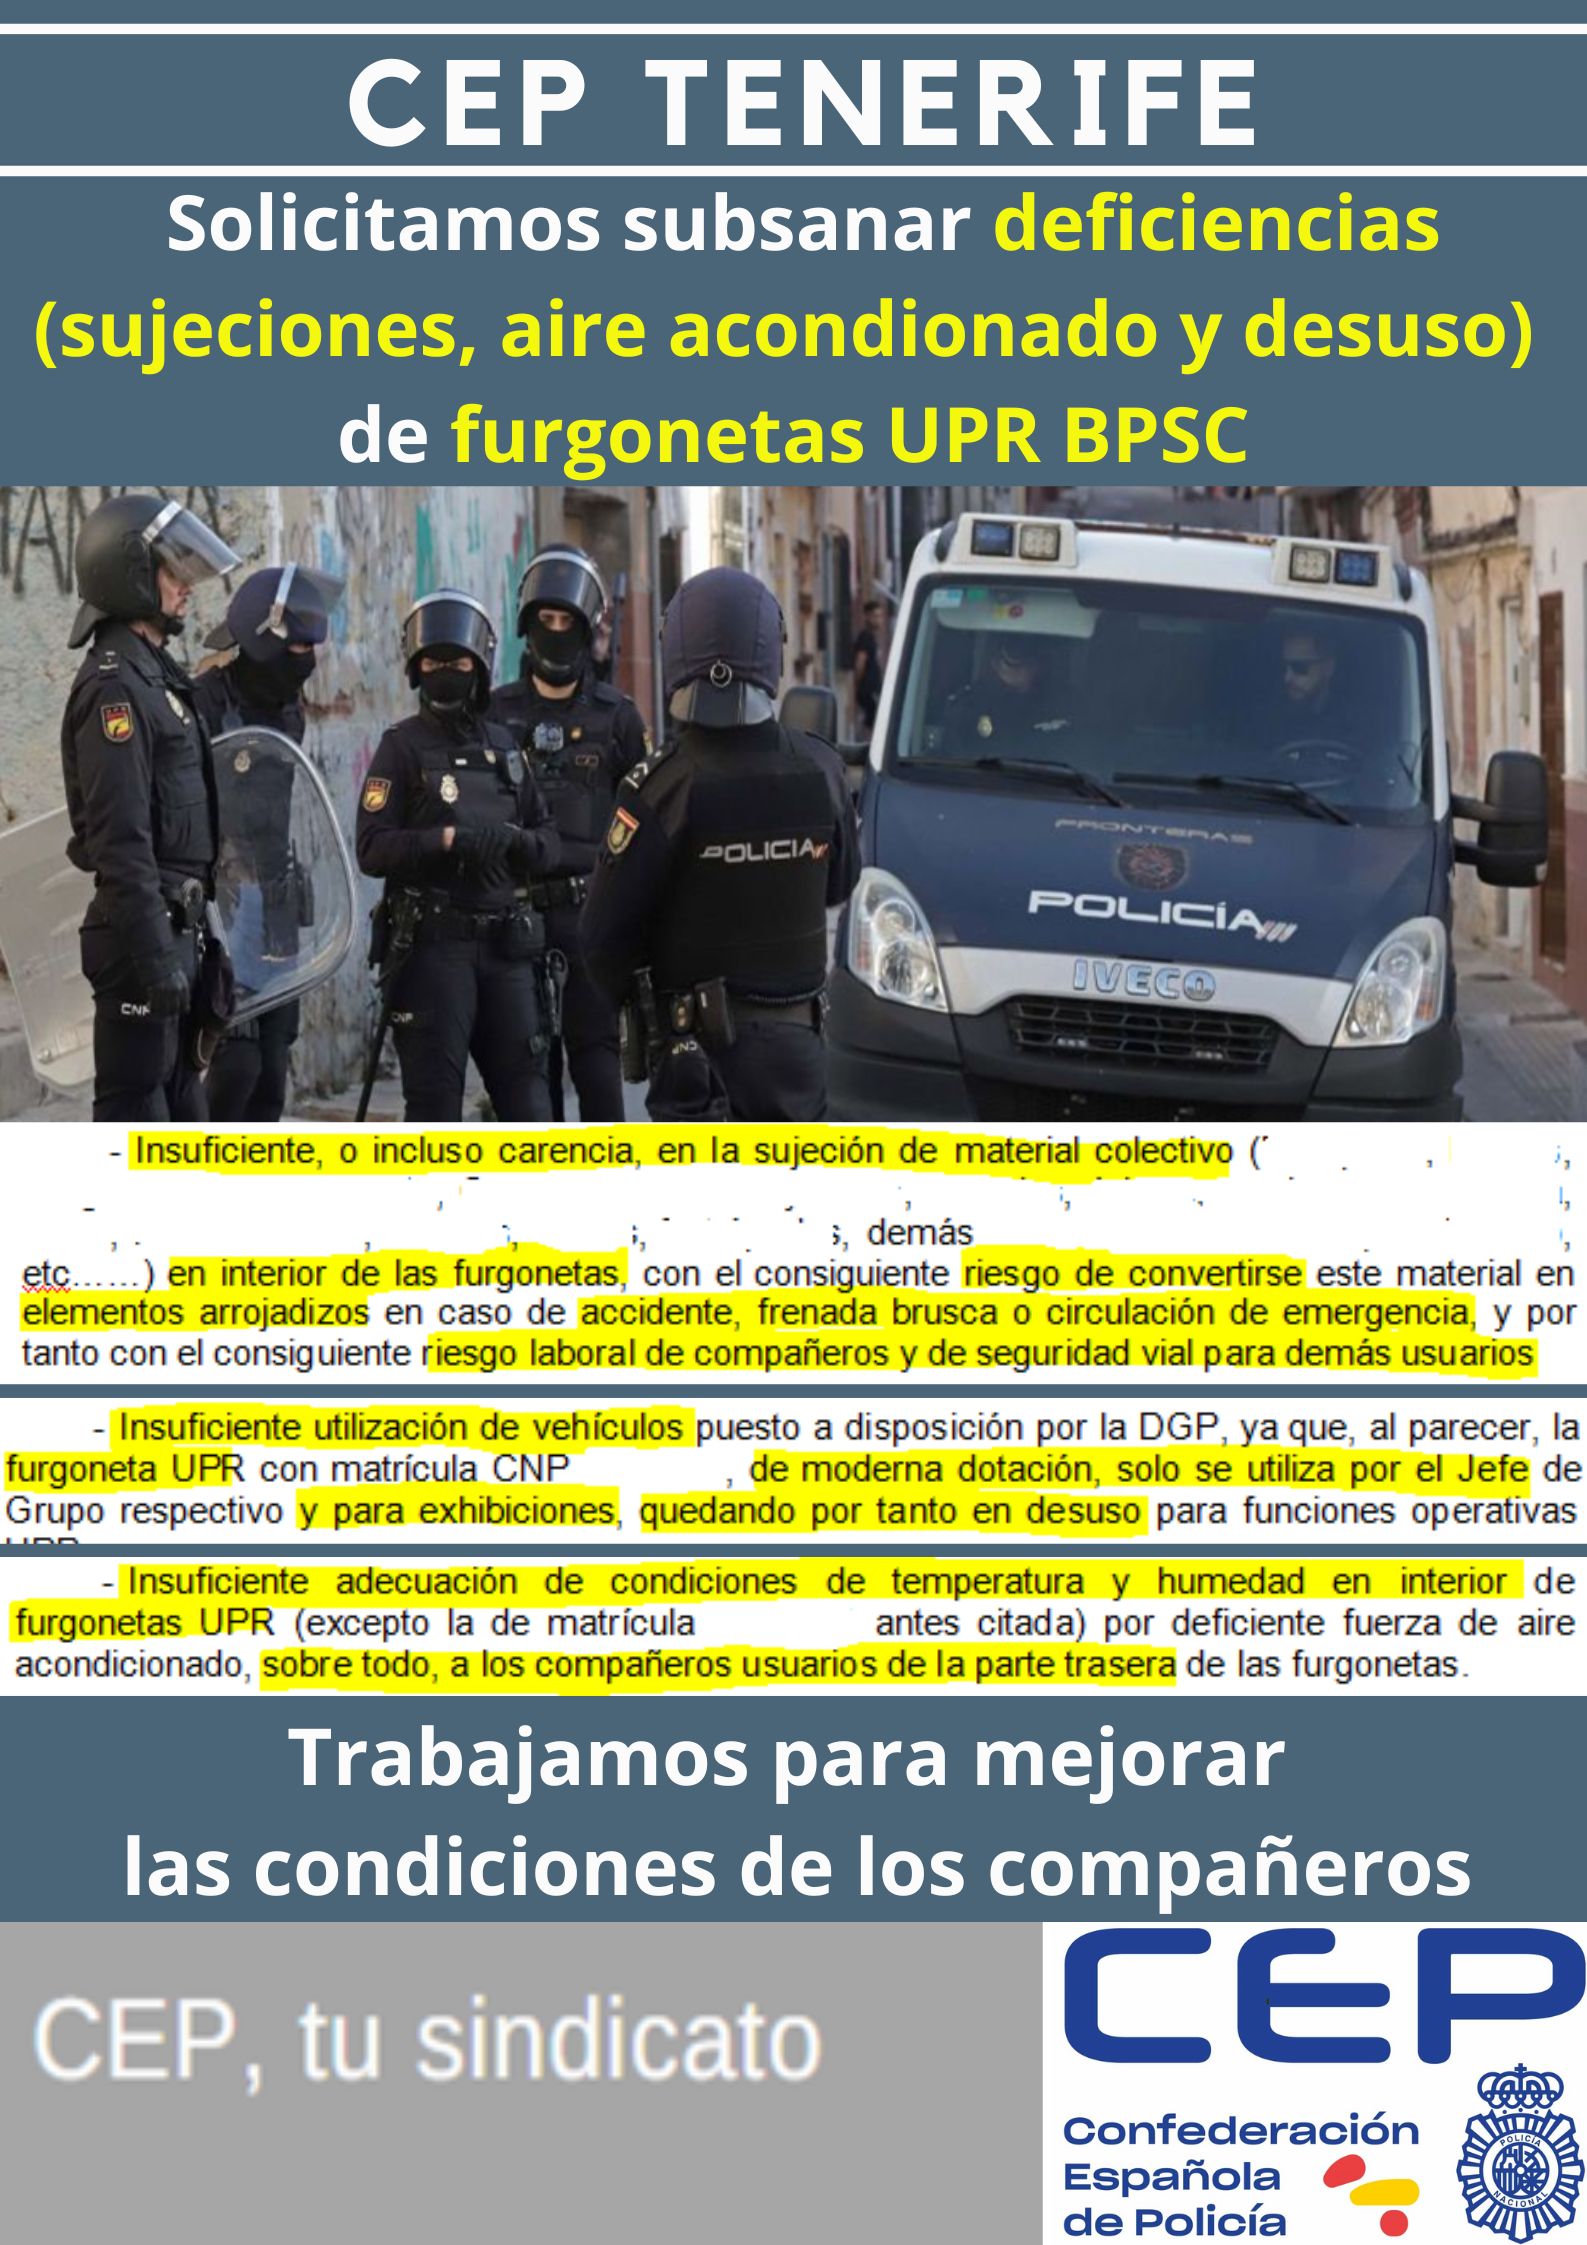 Solicitamos subsanar deficiencias de furgonetas UPR BPSC